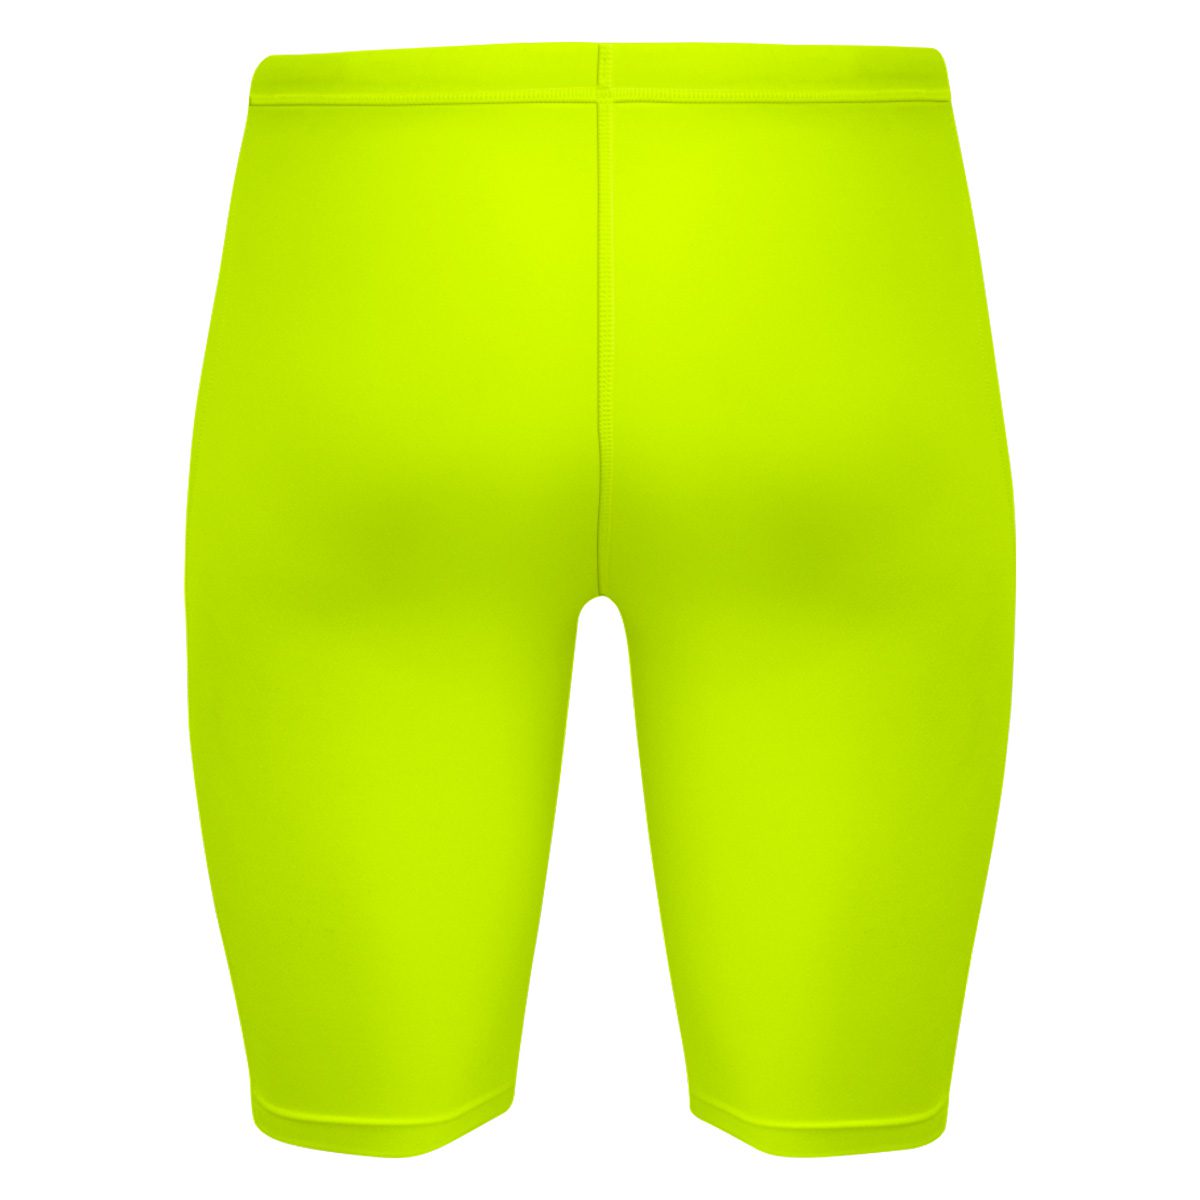 Mens Compression Shorts - Fluoro Yellow - Blackchrome